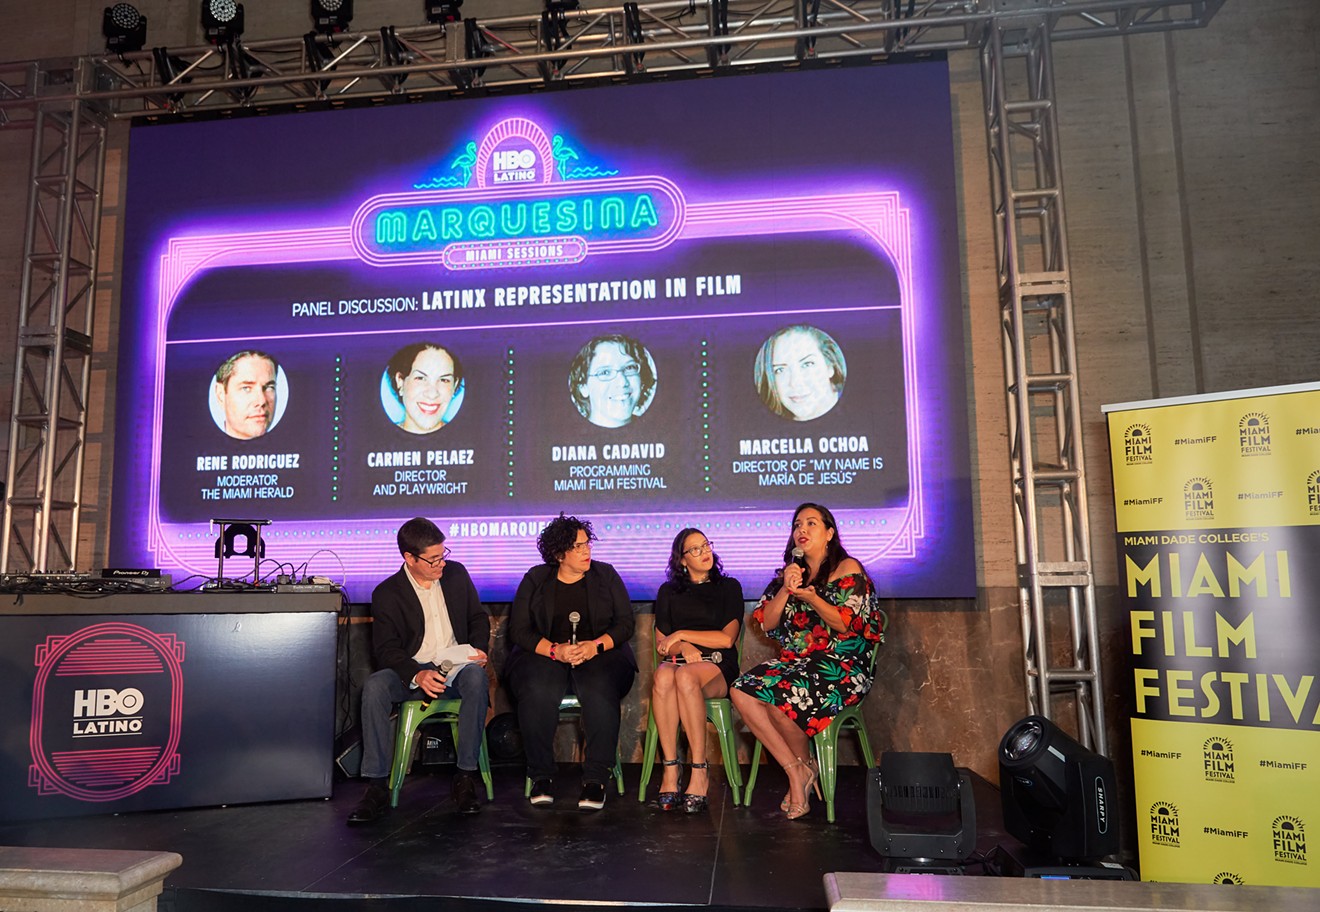 Panelists Rene Rodriguez, Carmen Pelaez, Diana Cadavid, and Marcella Ochoa discuss Latinx represention in TV and film at HBO Latino's Marquesina Sessions in Miami.